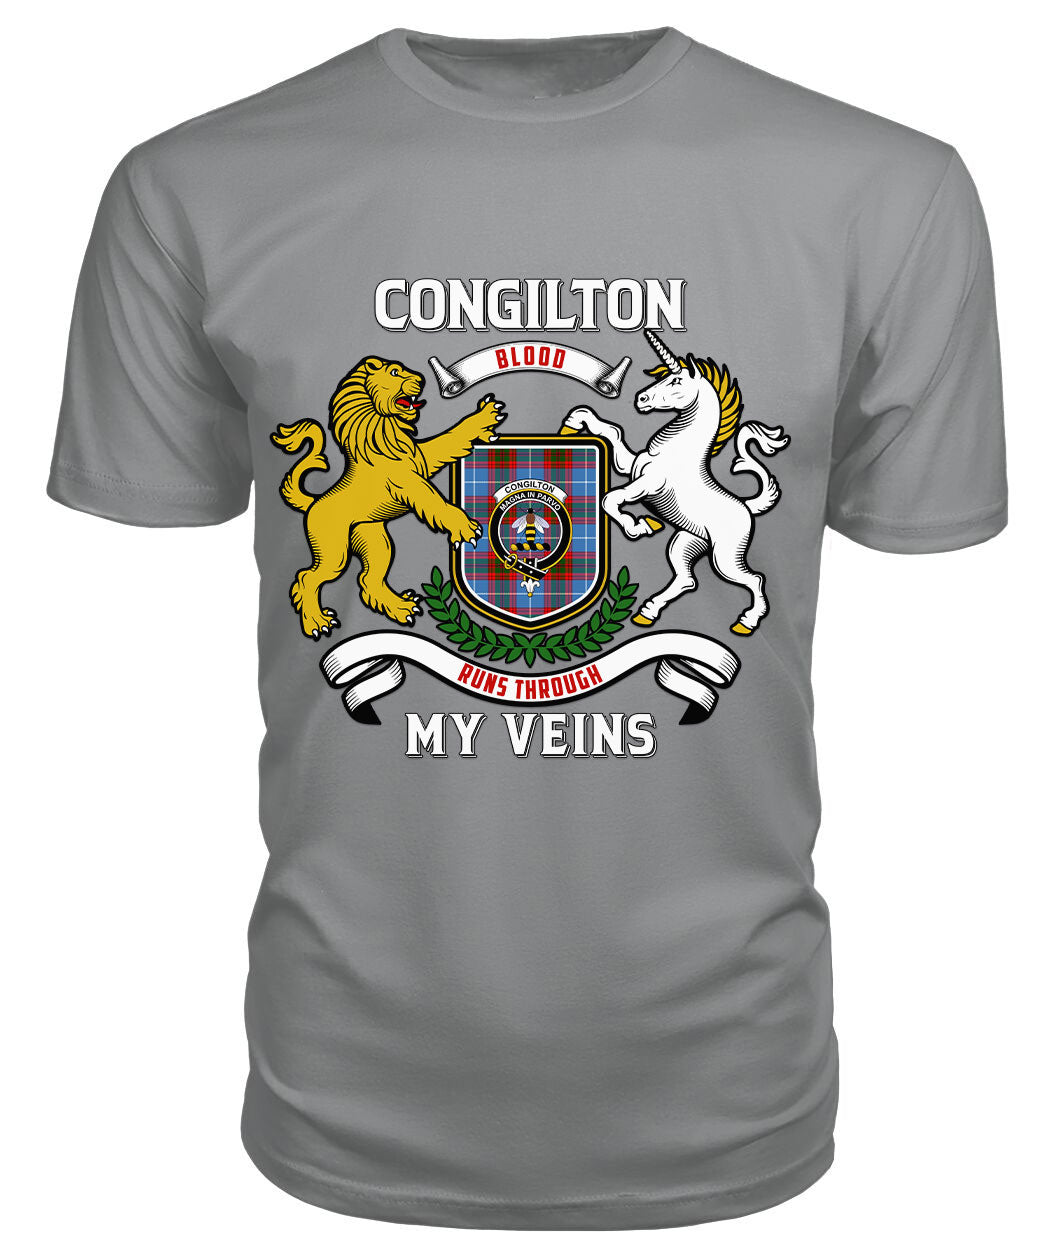 Congilton Tartan Crest 2D T-shirt - Blood Runs Through My Veins Style